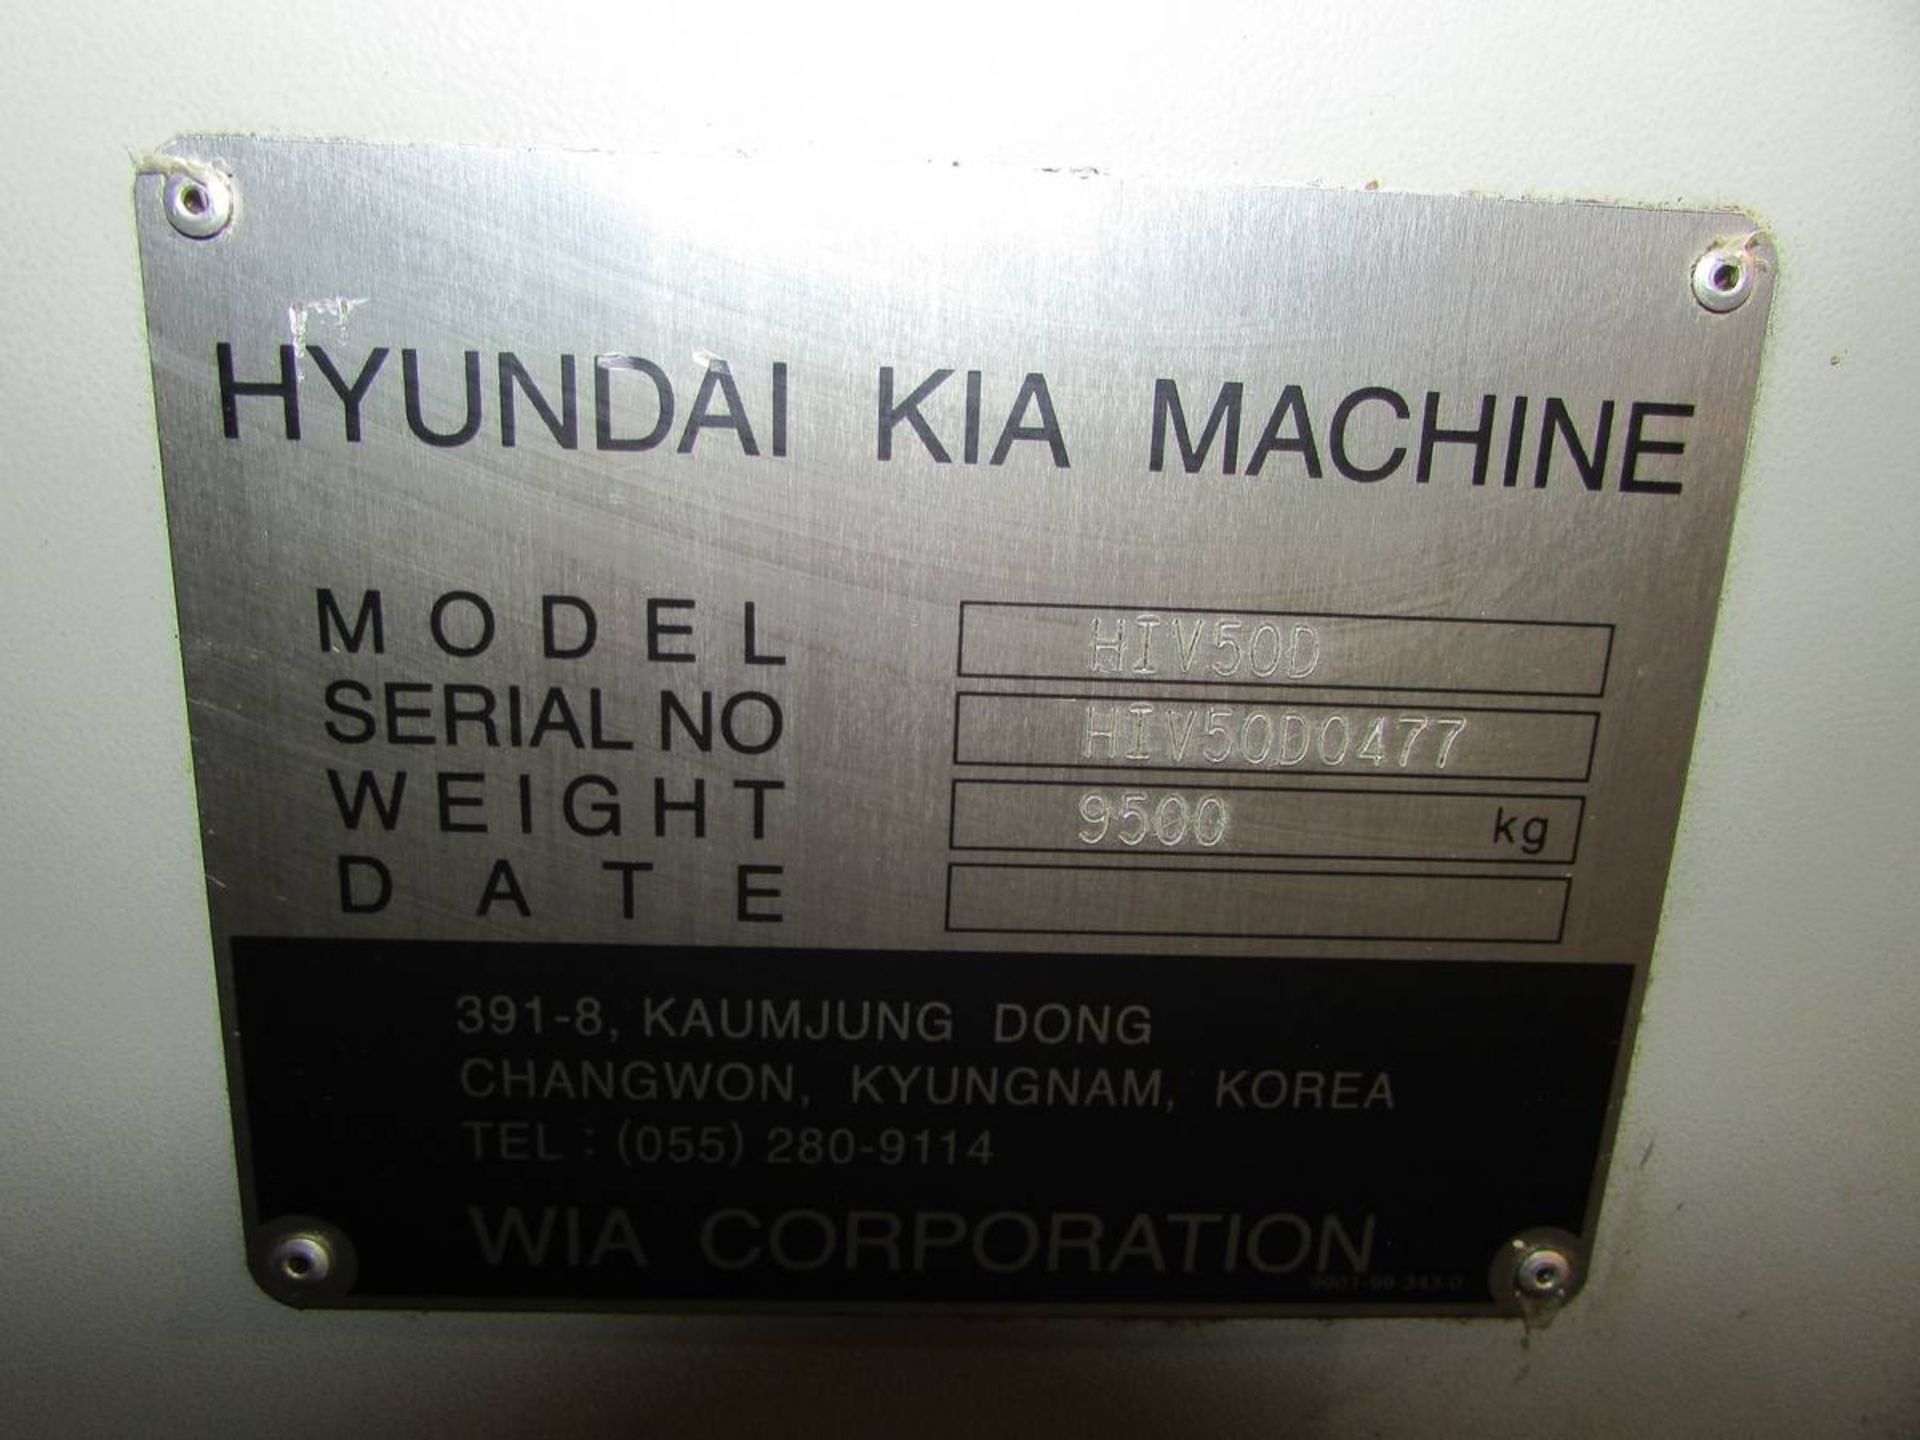 2007 Hyundia Kia Machine HIV50D Vertical 3-Axis CNC Machining Center - Image 28 of 28